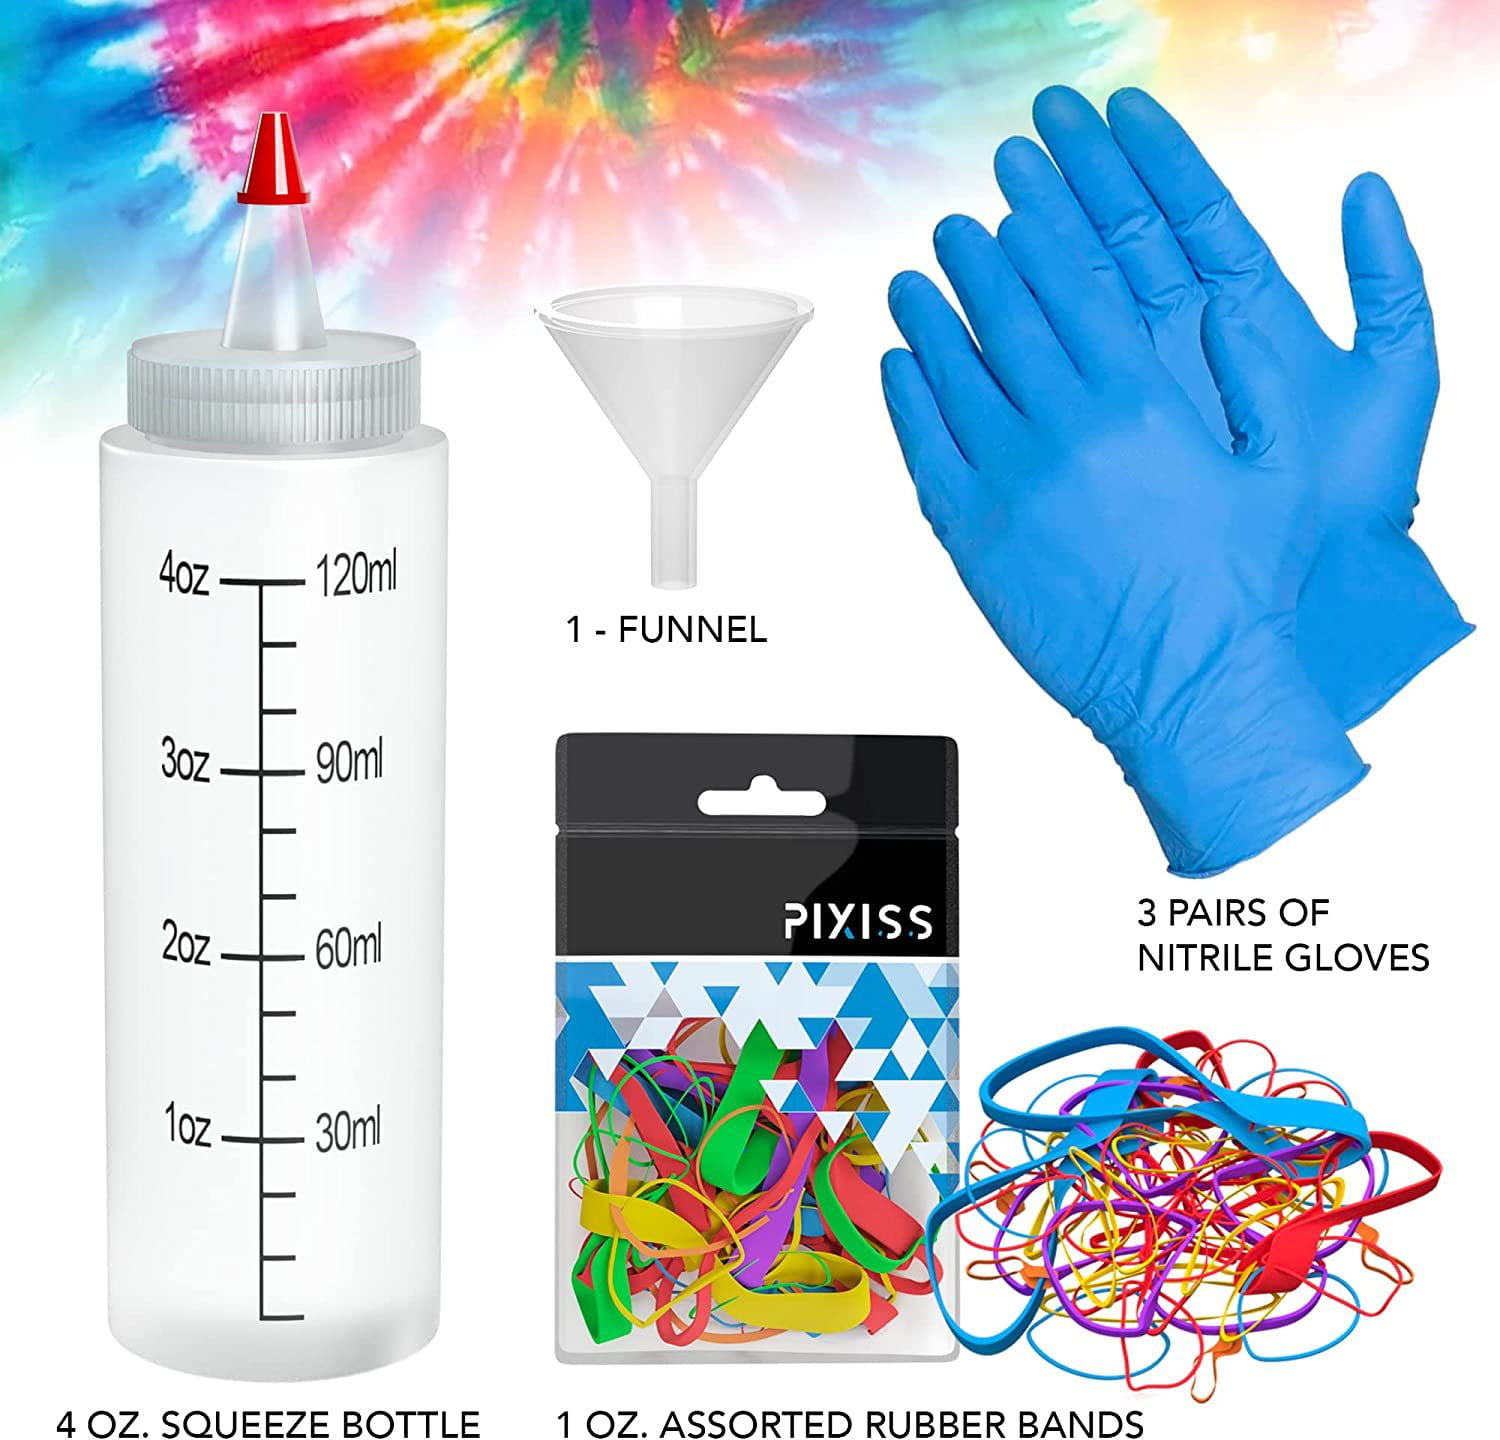 Rit All Purpose Liquid Fabric Dye Bundle (4 Pack) , 2 - Black 8oz Dye —  Grand River Art Supply